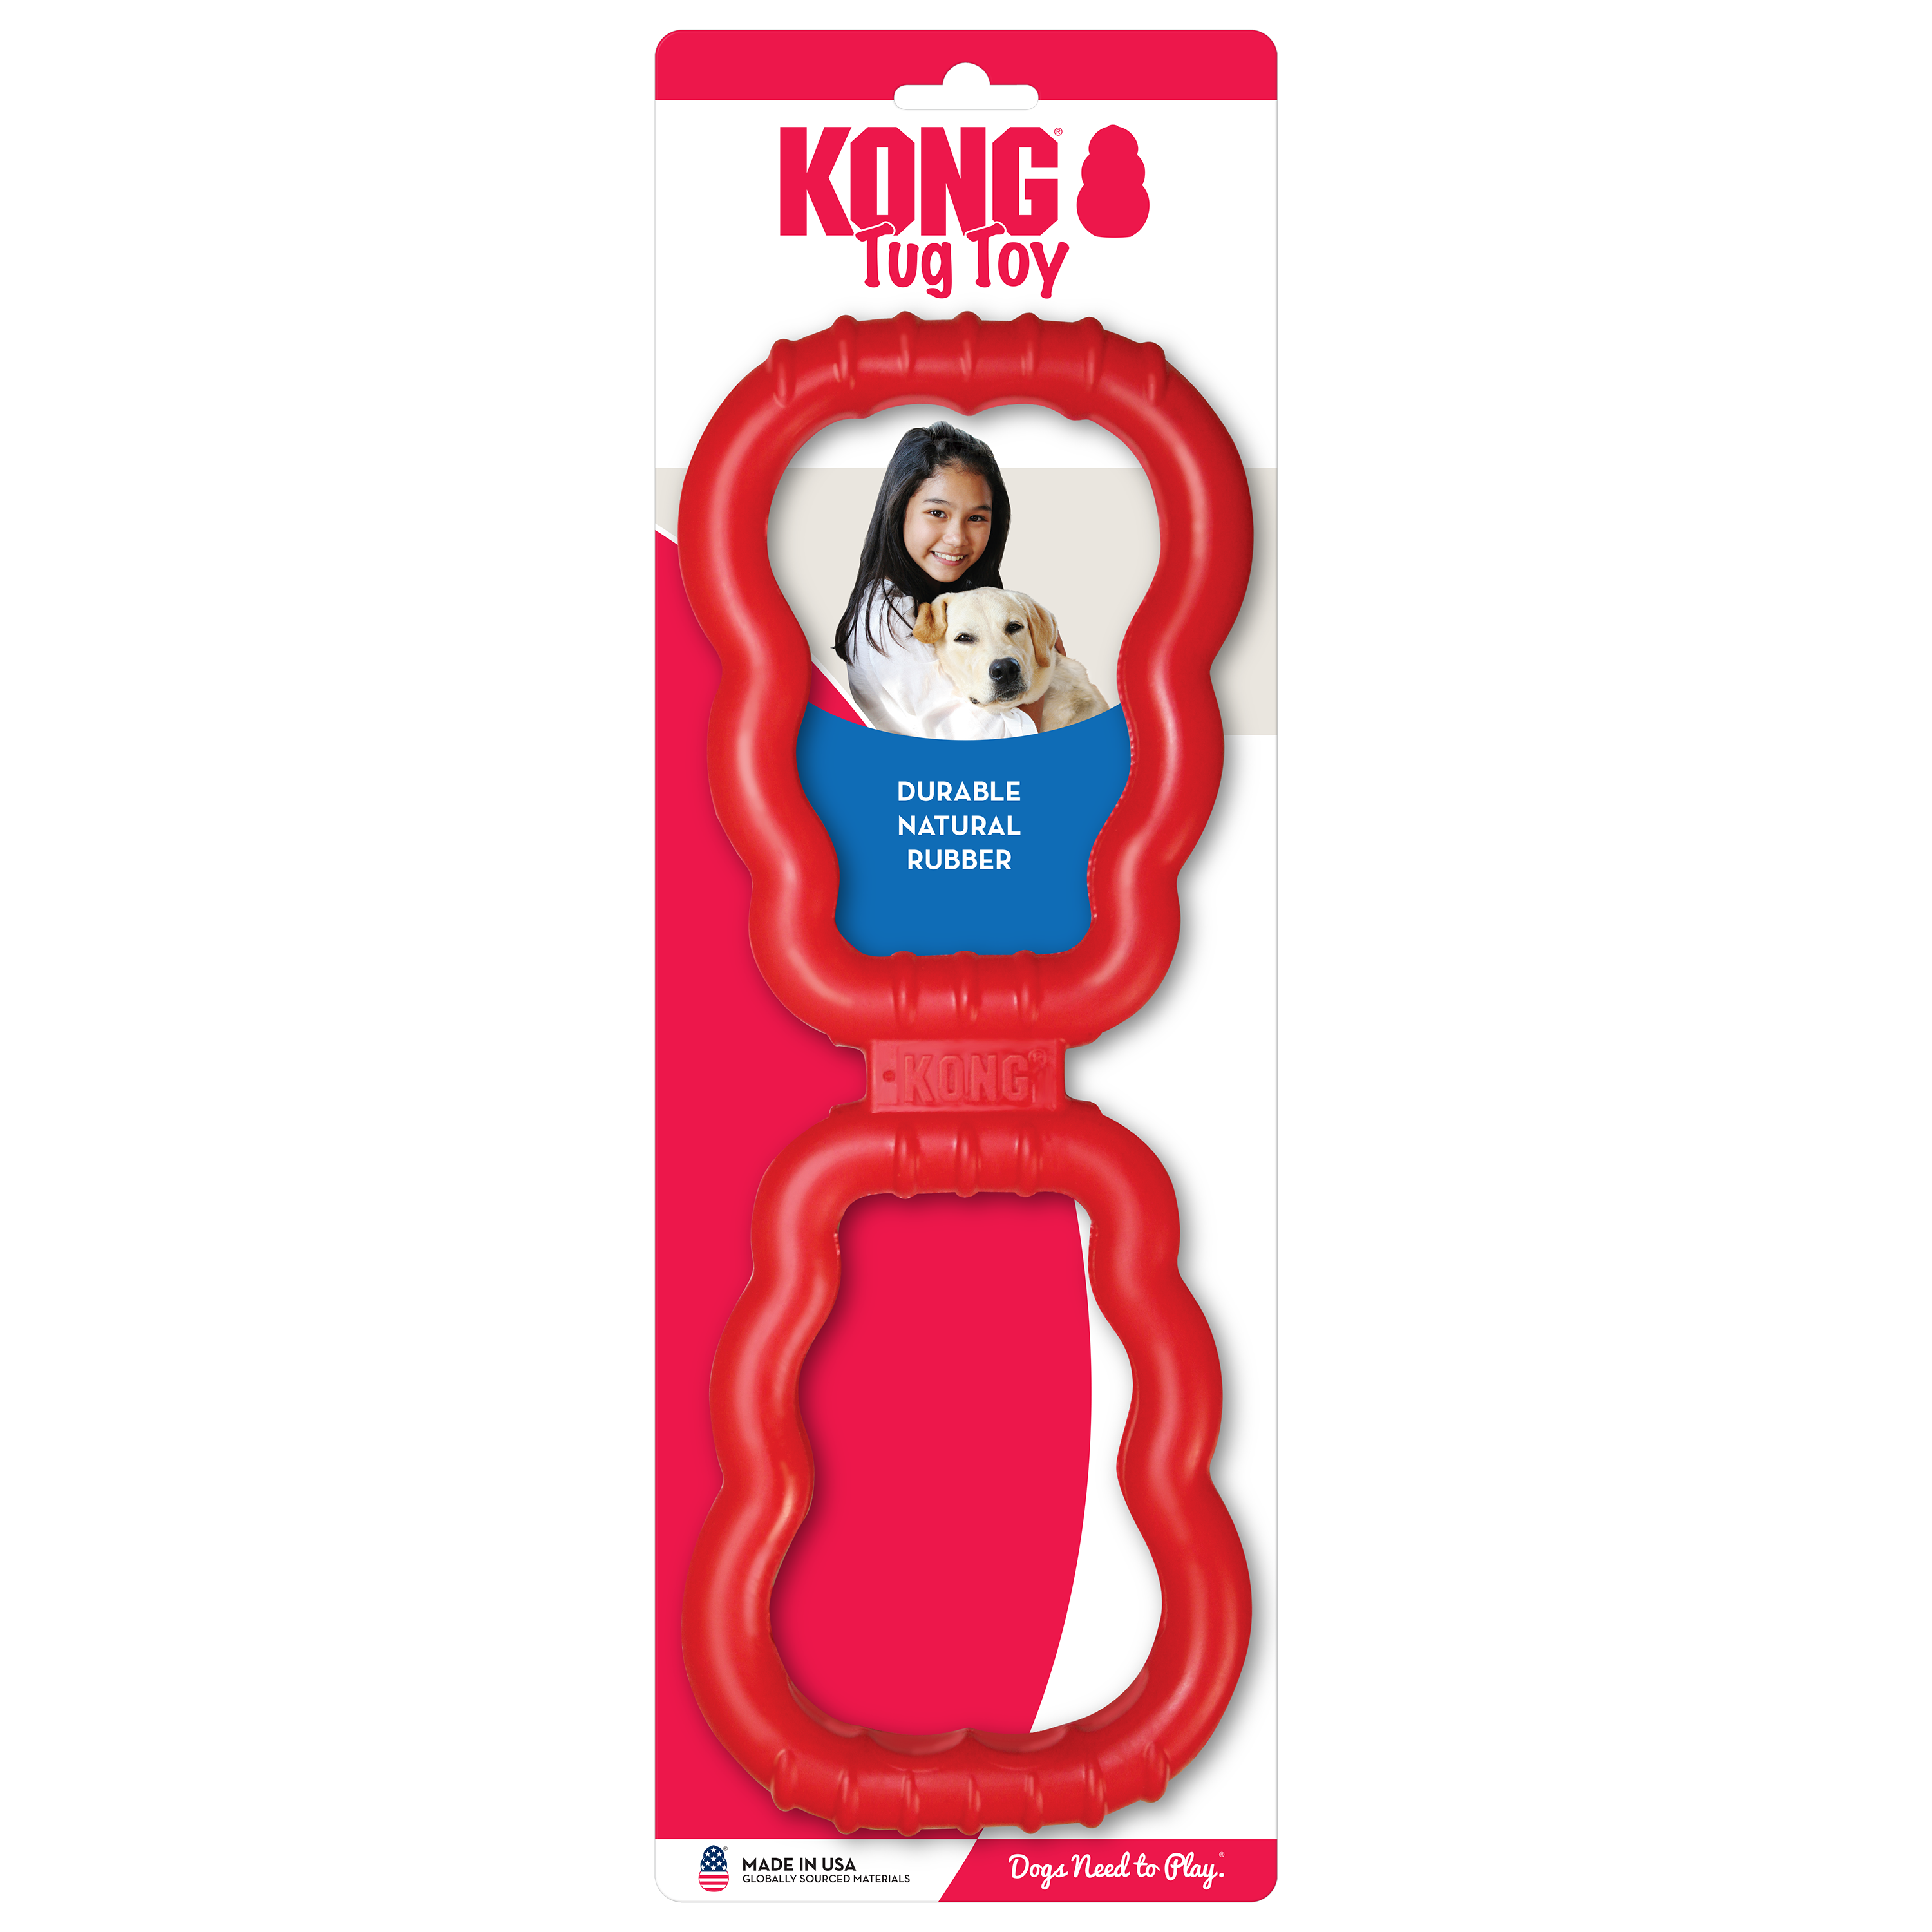 KONG Tug onpack product image